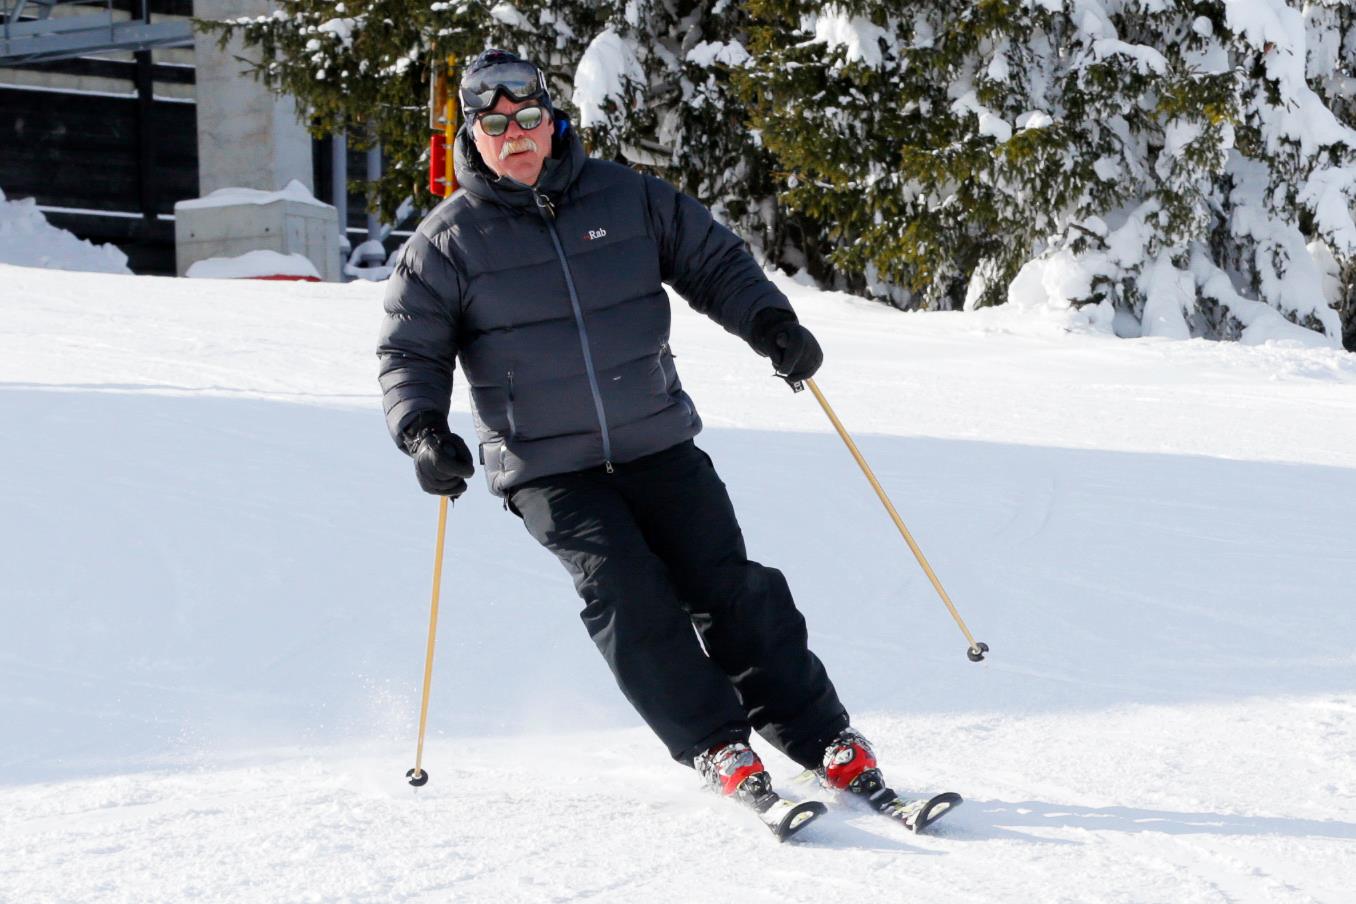 Mike Beaudet fluent english american ski instructor megeve french alps